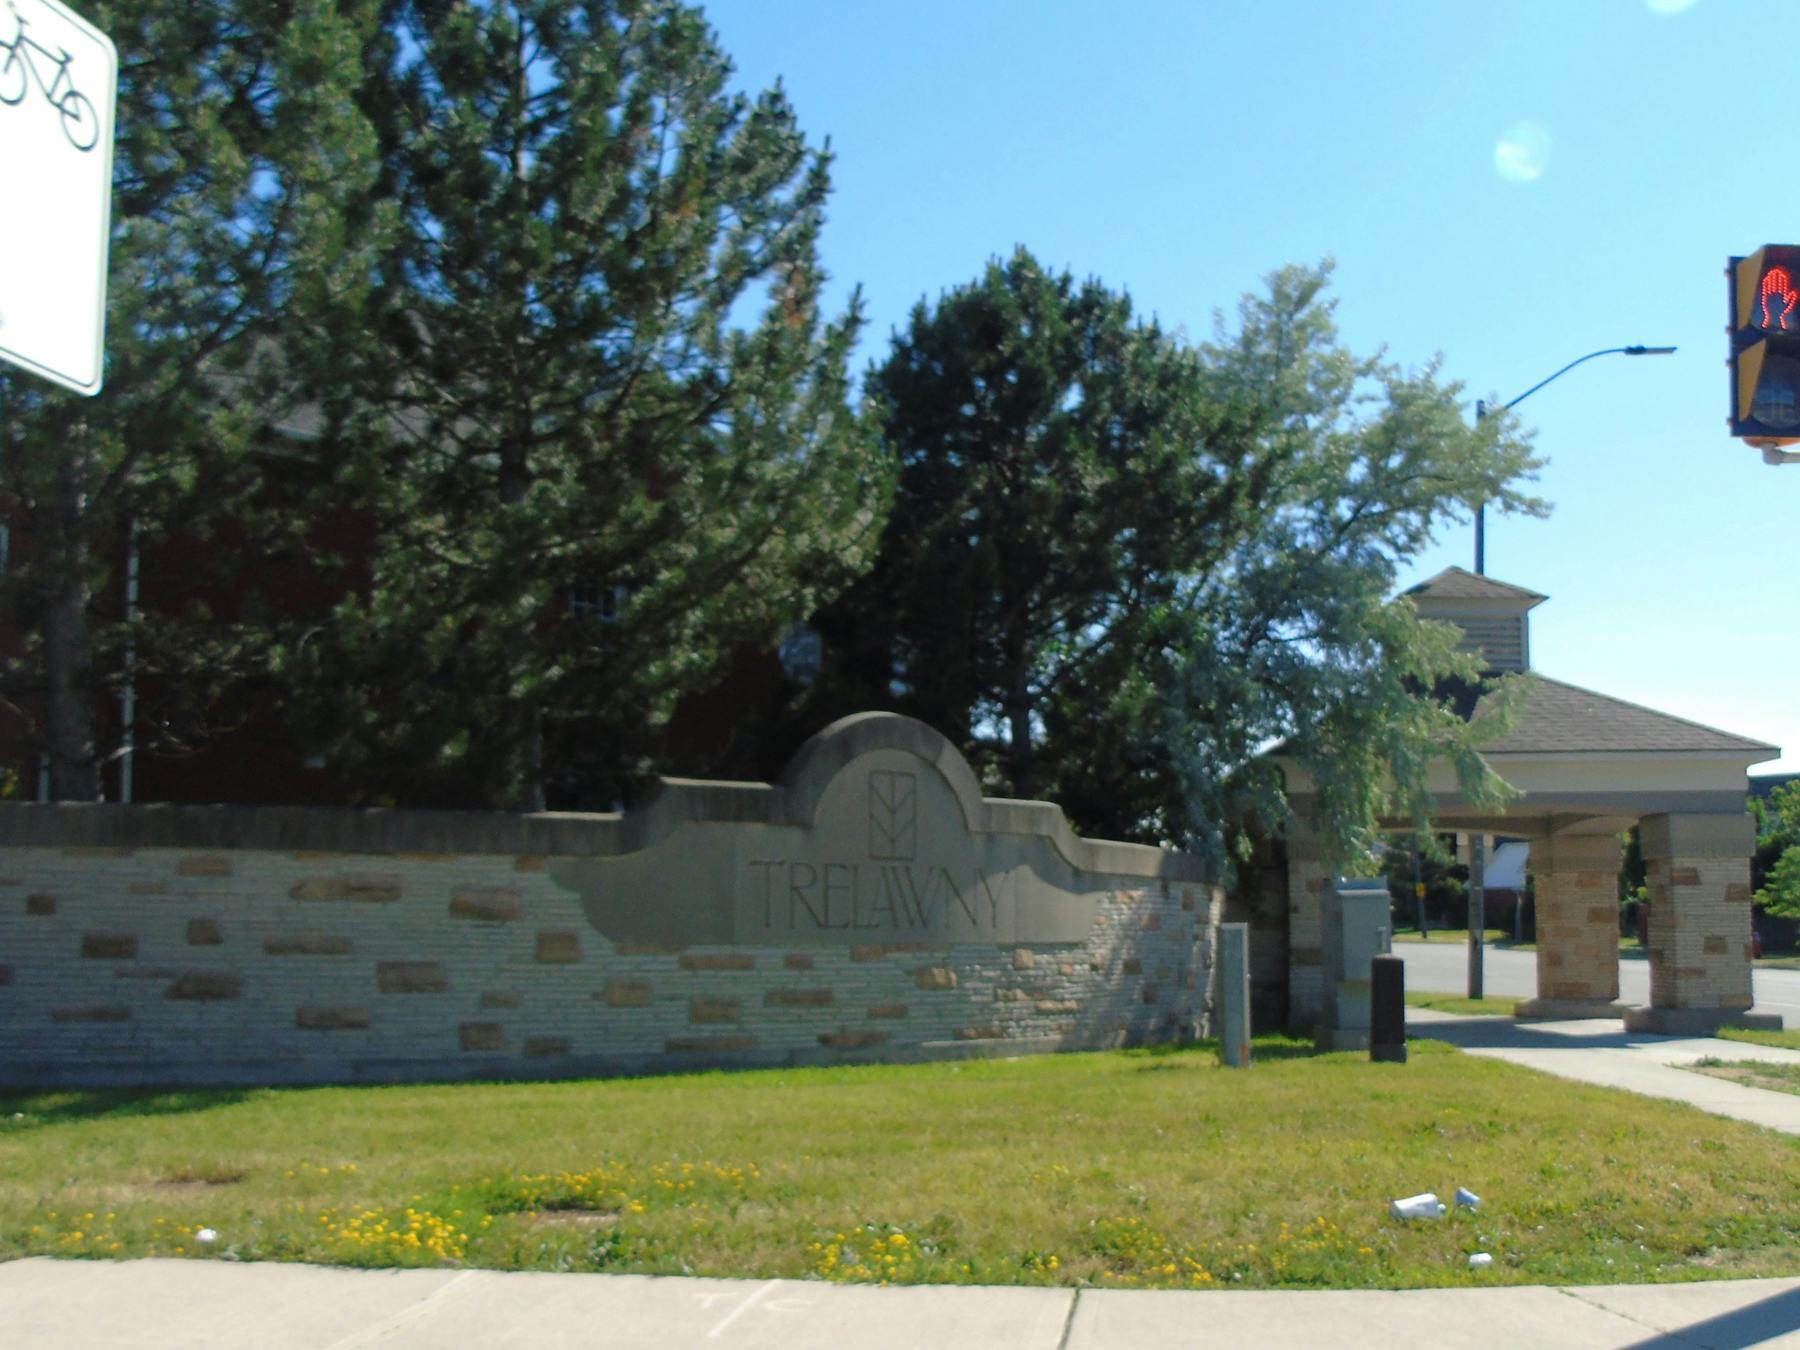 Entry pavilion and signage of the Trelawny Community 